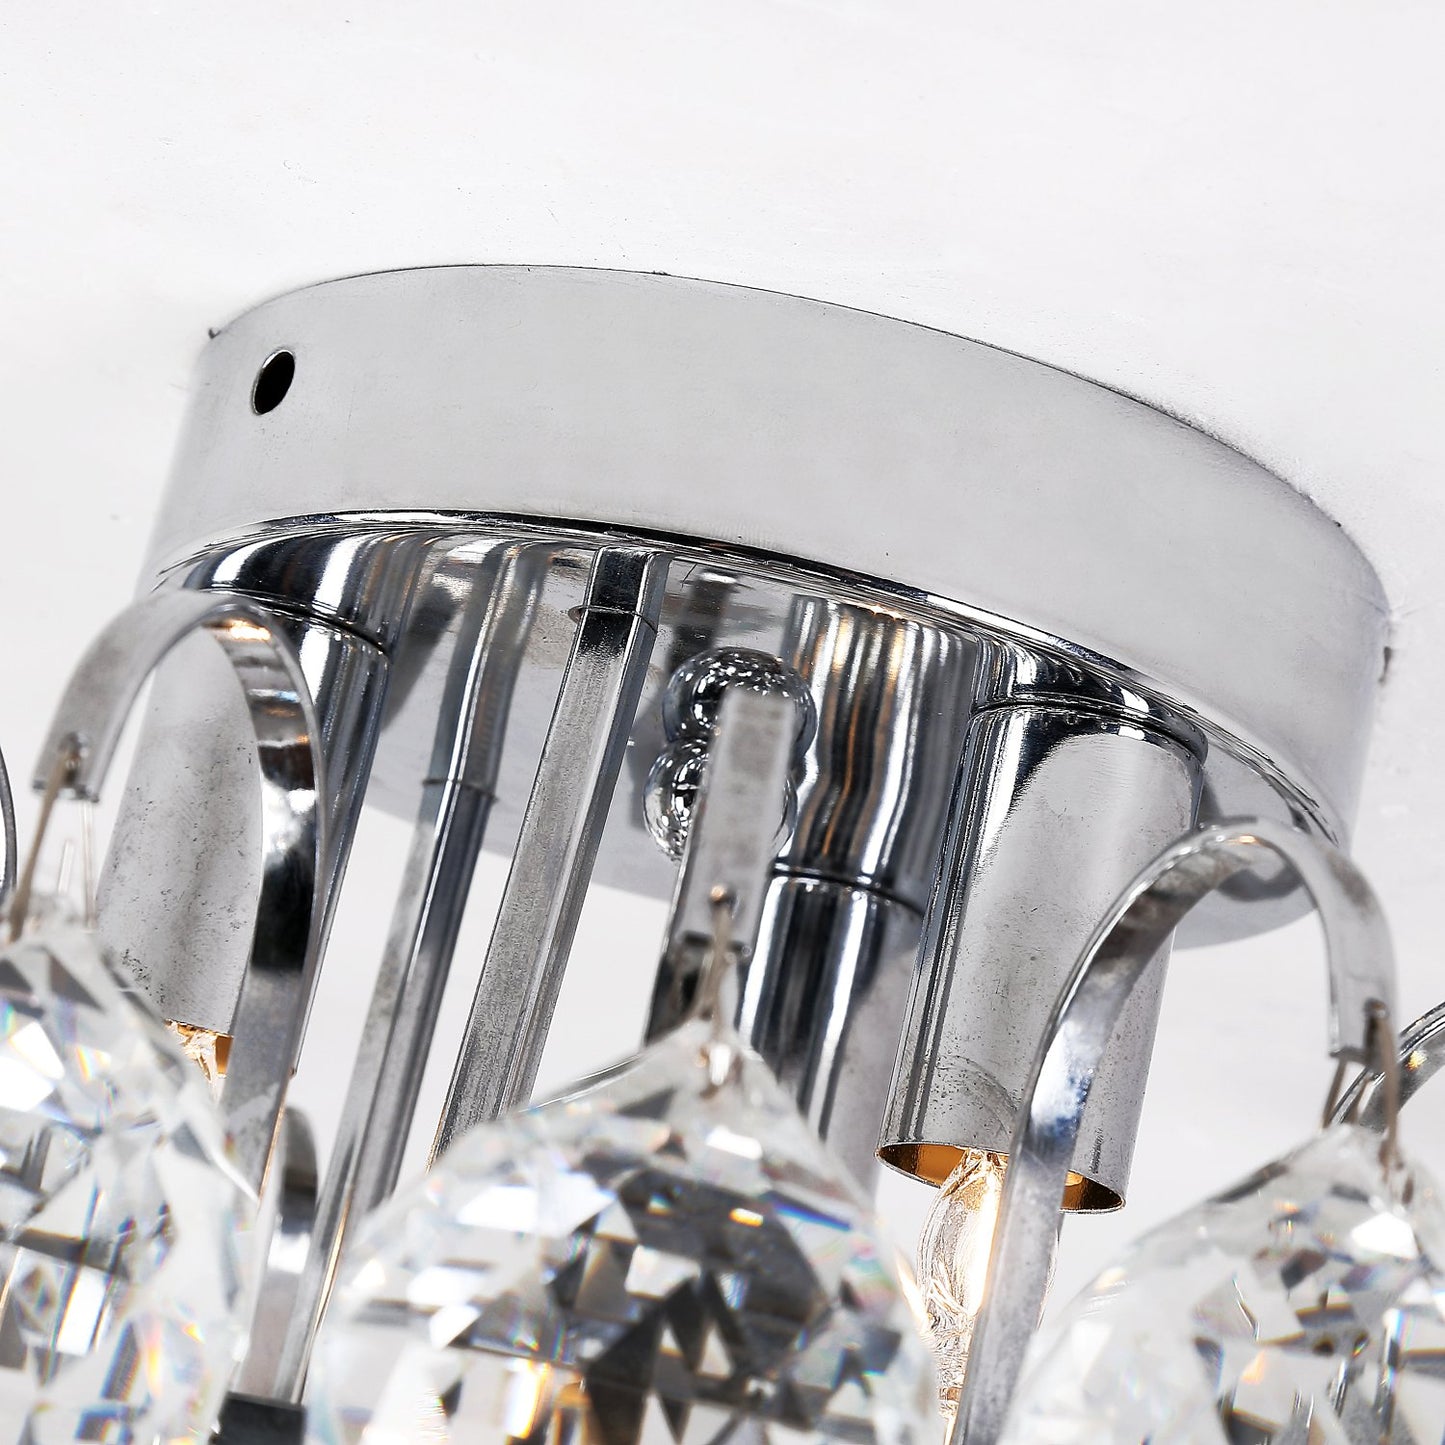 HOMCOM 30x30cm K9 Crystal Droplets Ceiling Pendant Light Silver